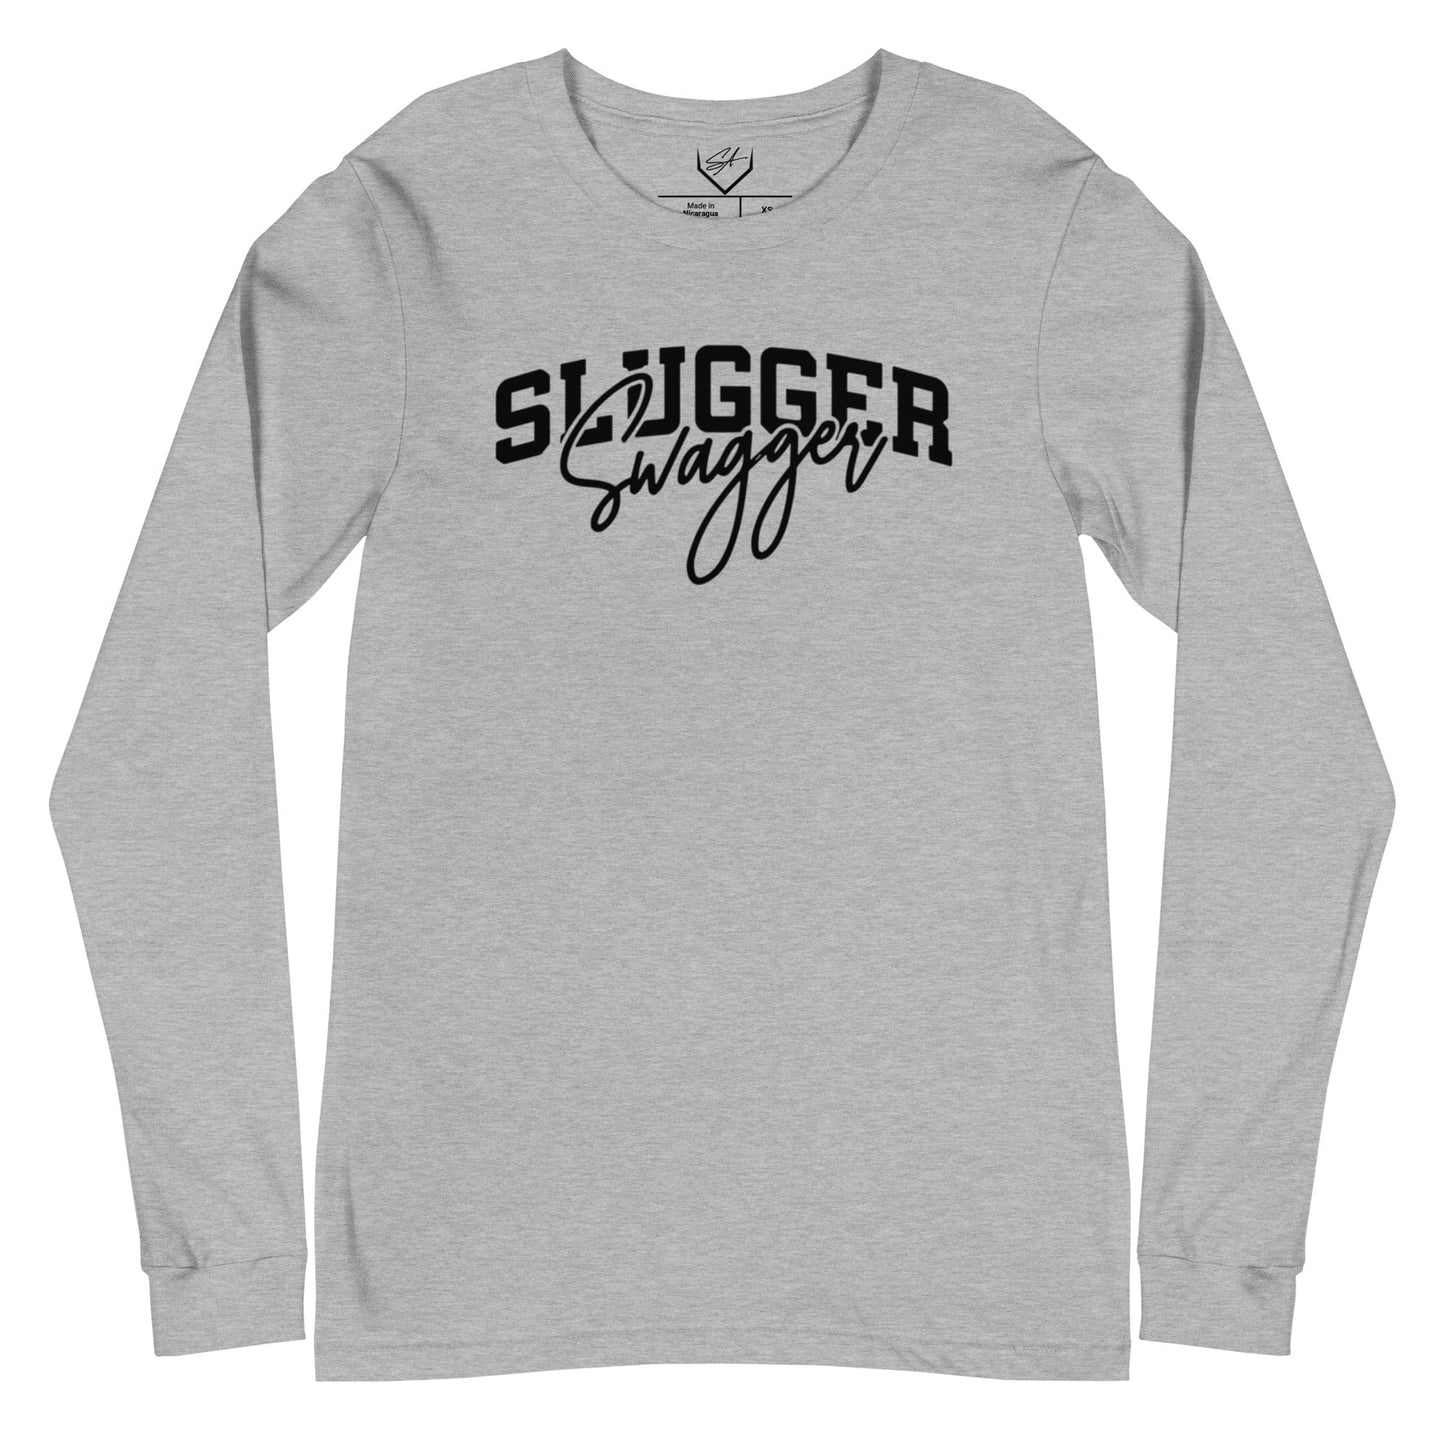 Slugger Swagger - Adult Long Sleeve